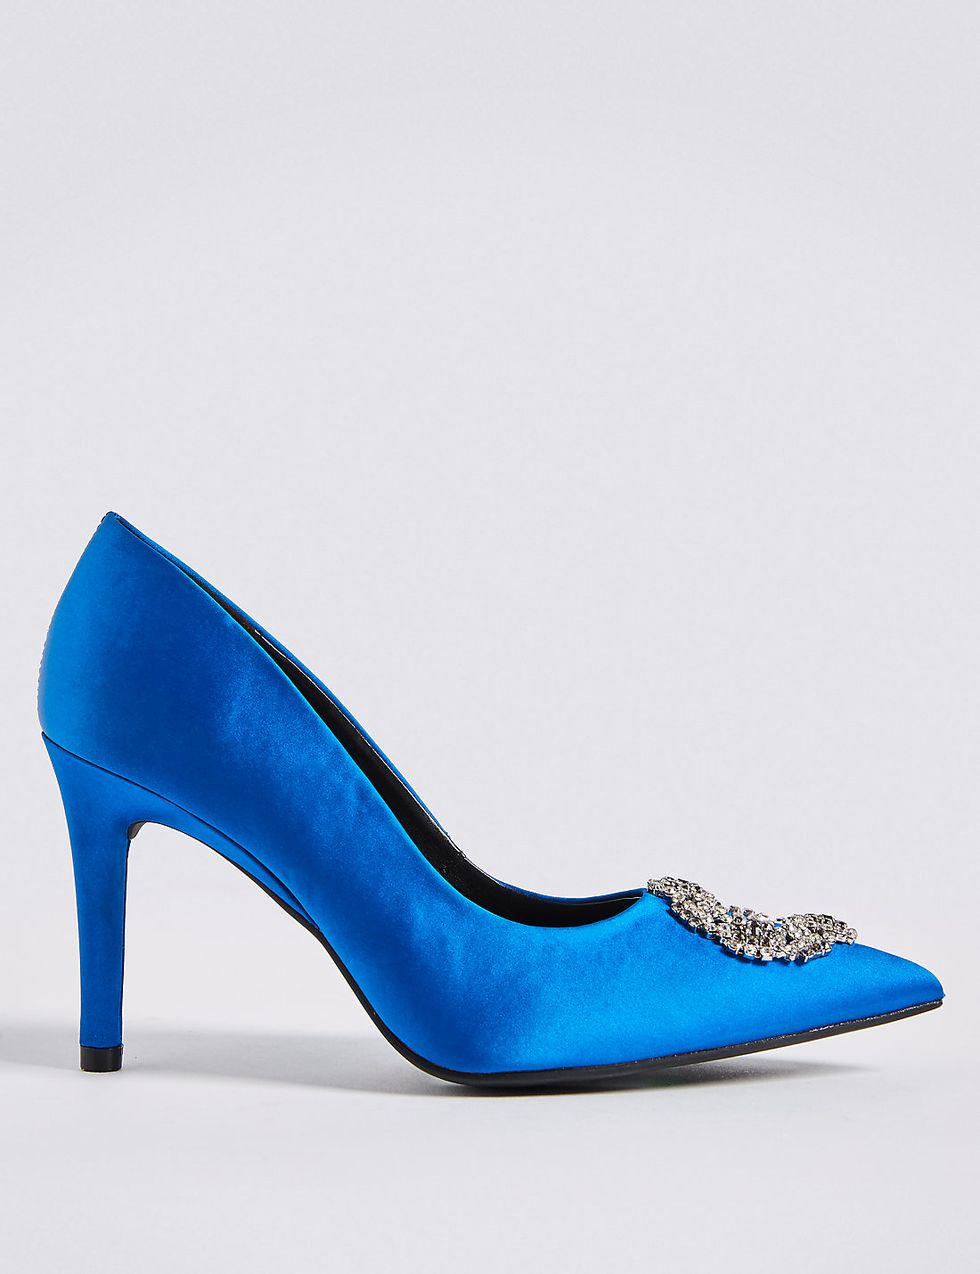 Footwear, High heels, Blue, Cobalt blue, Shoe, Turquoise, Electric blue, Basic pump, Teal, Court shoe, 